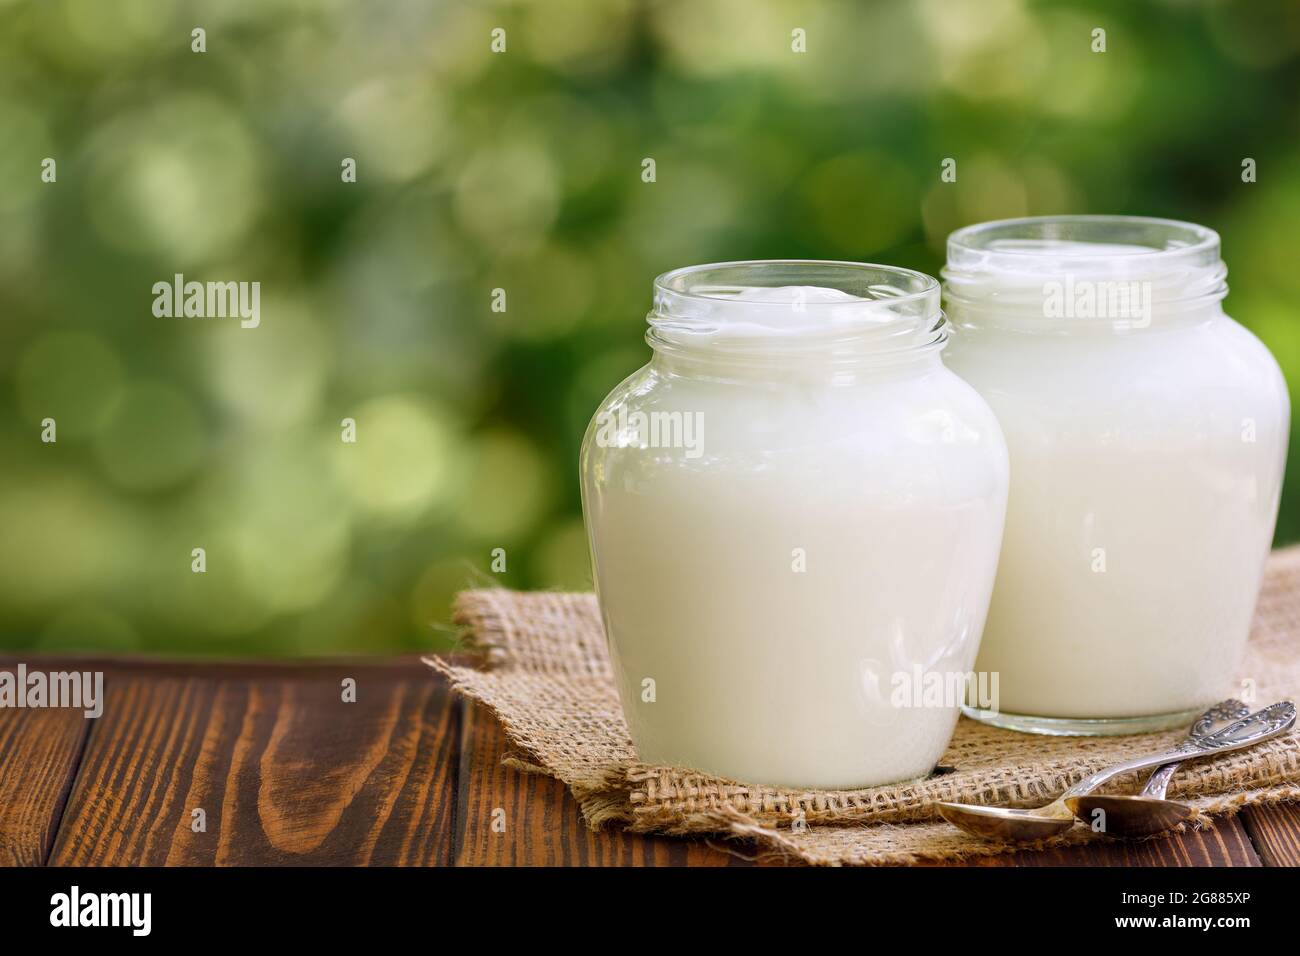 greek yogurt in two glass jars on table outdoors Stock Photo